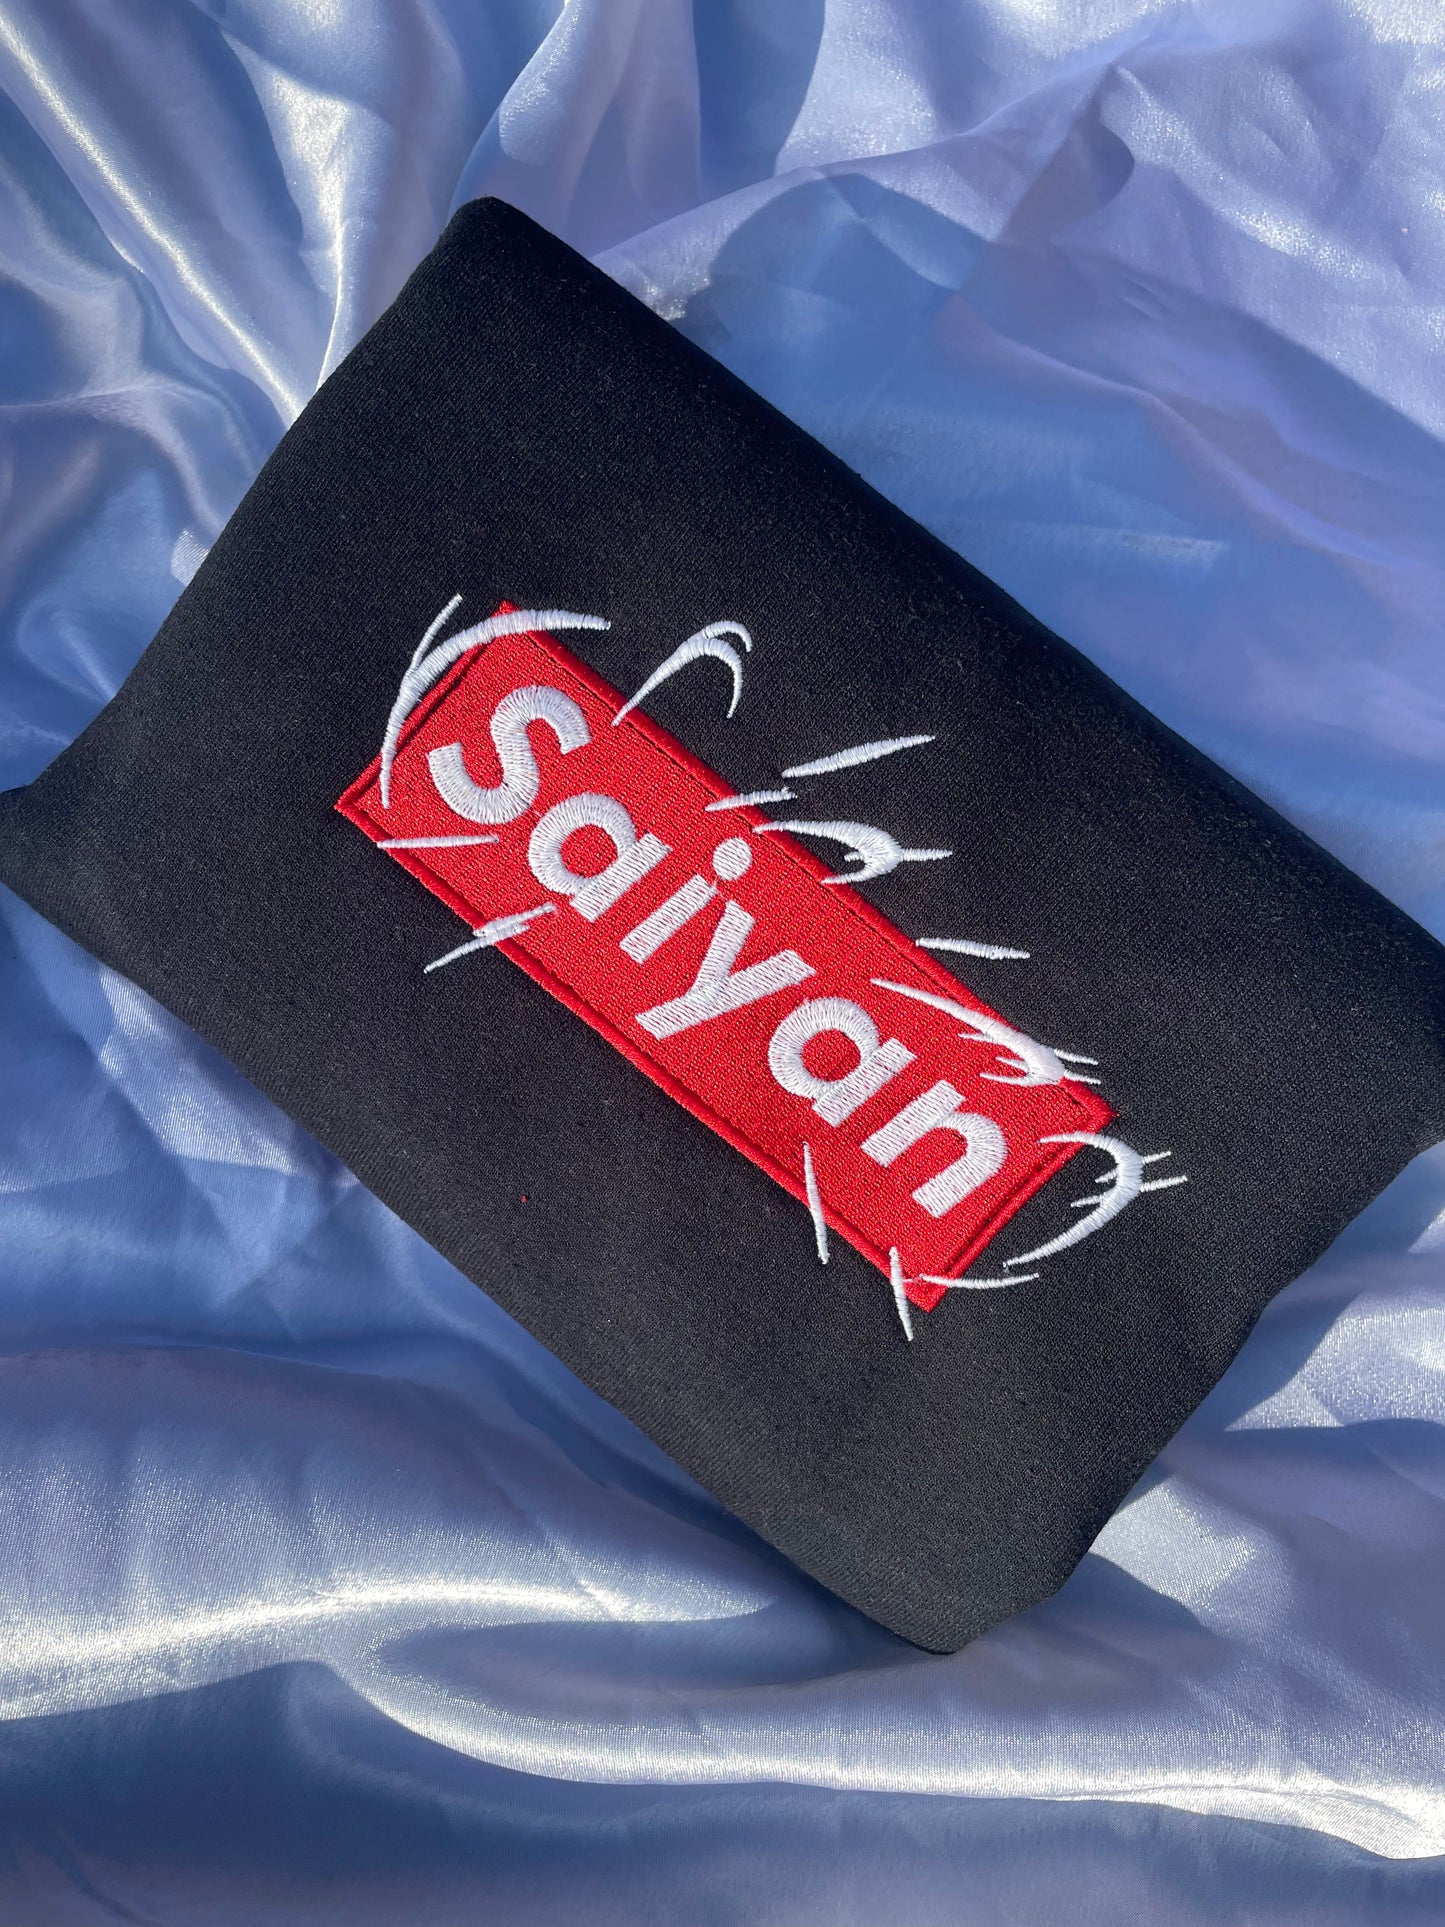 GLOW IN THE DARK Dragon Ball Z “Saiyan” Embroidered Sweatshirt/Hoodie